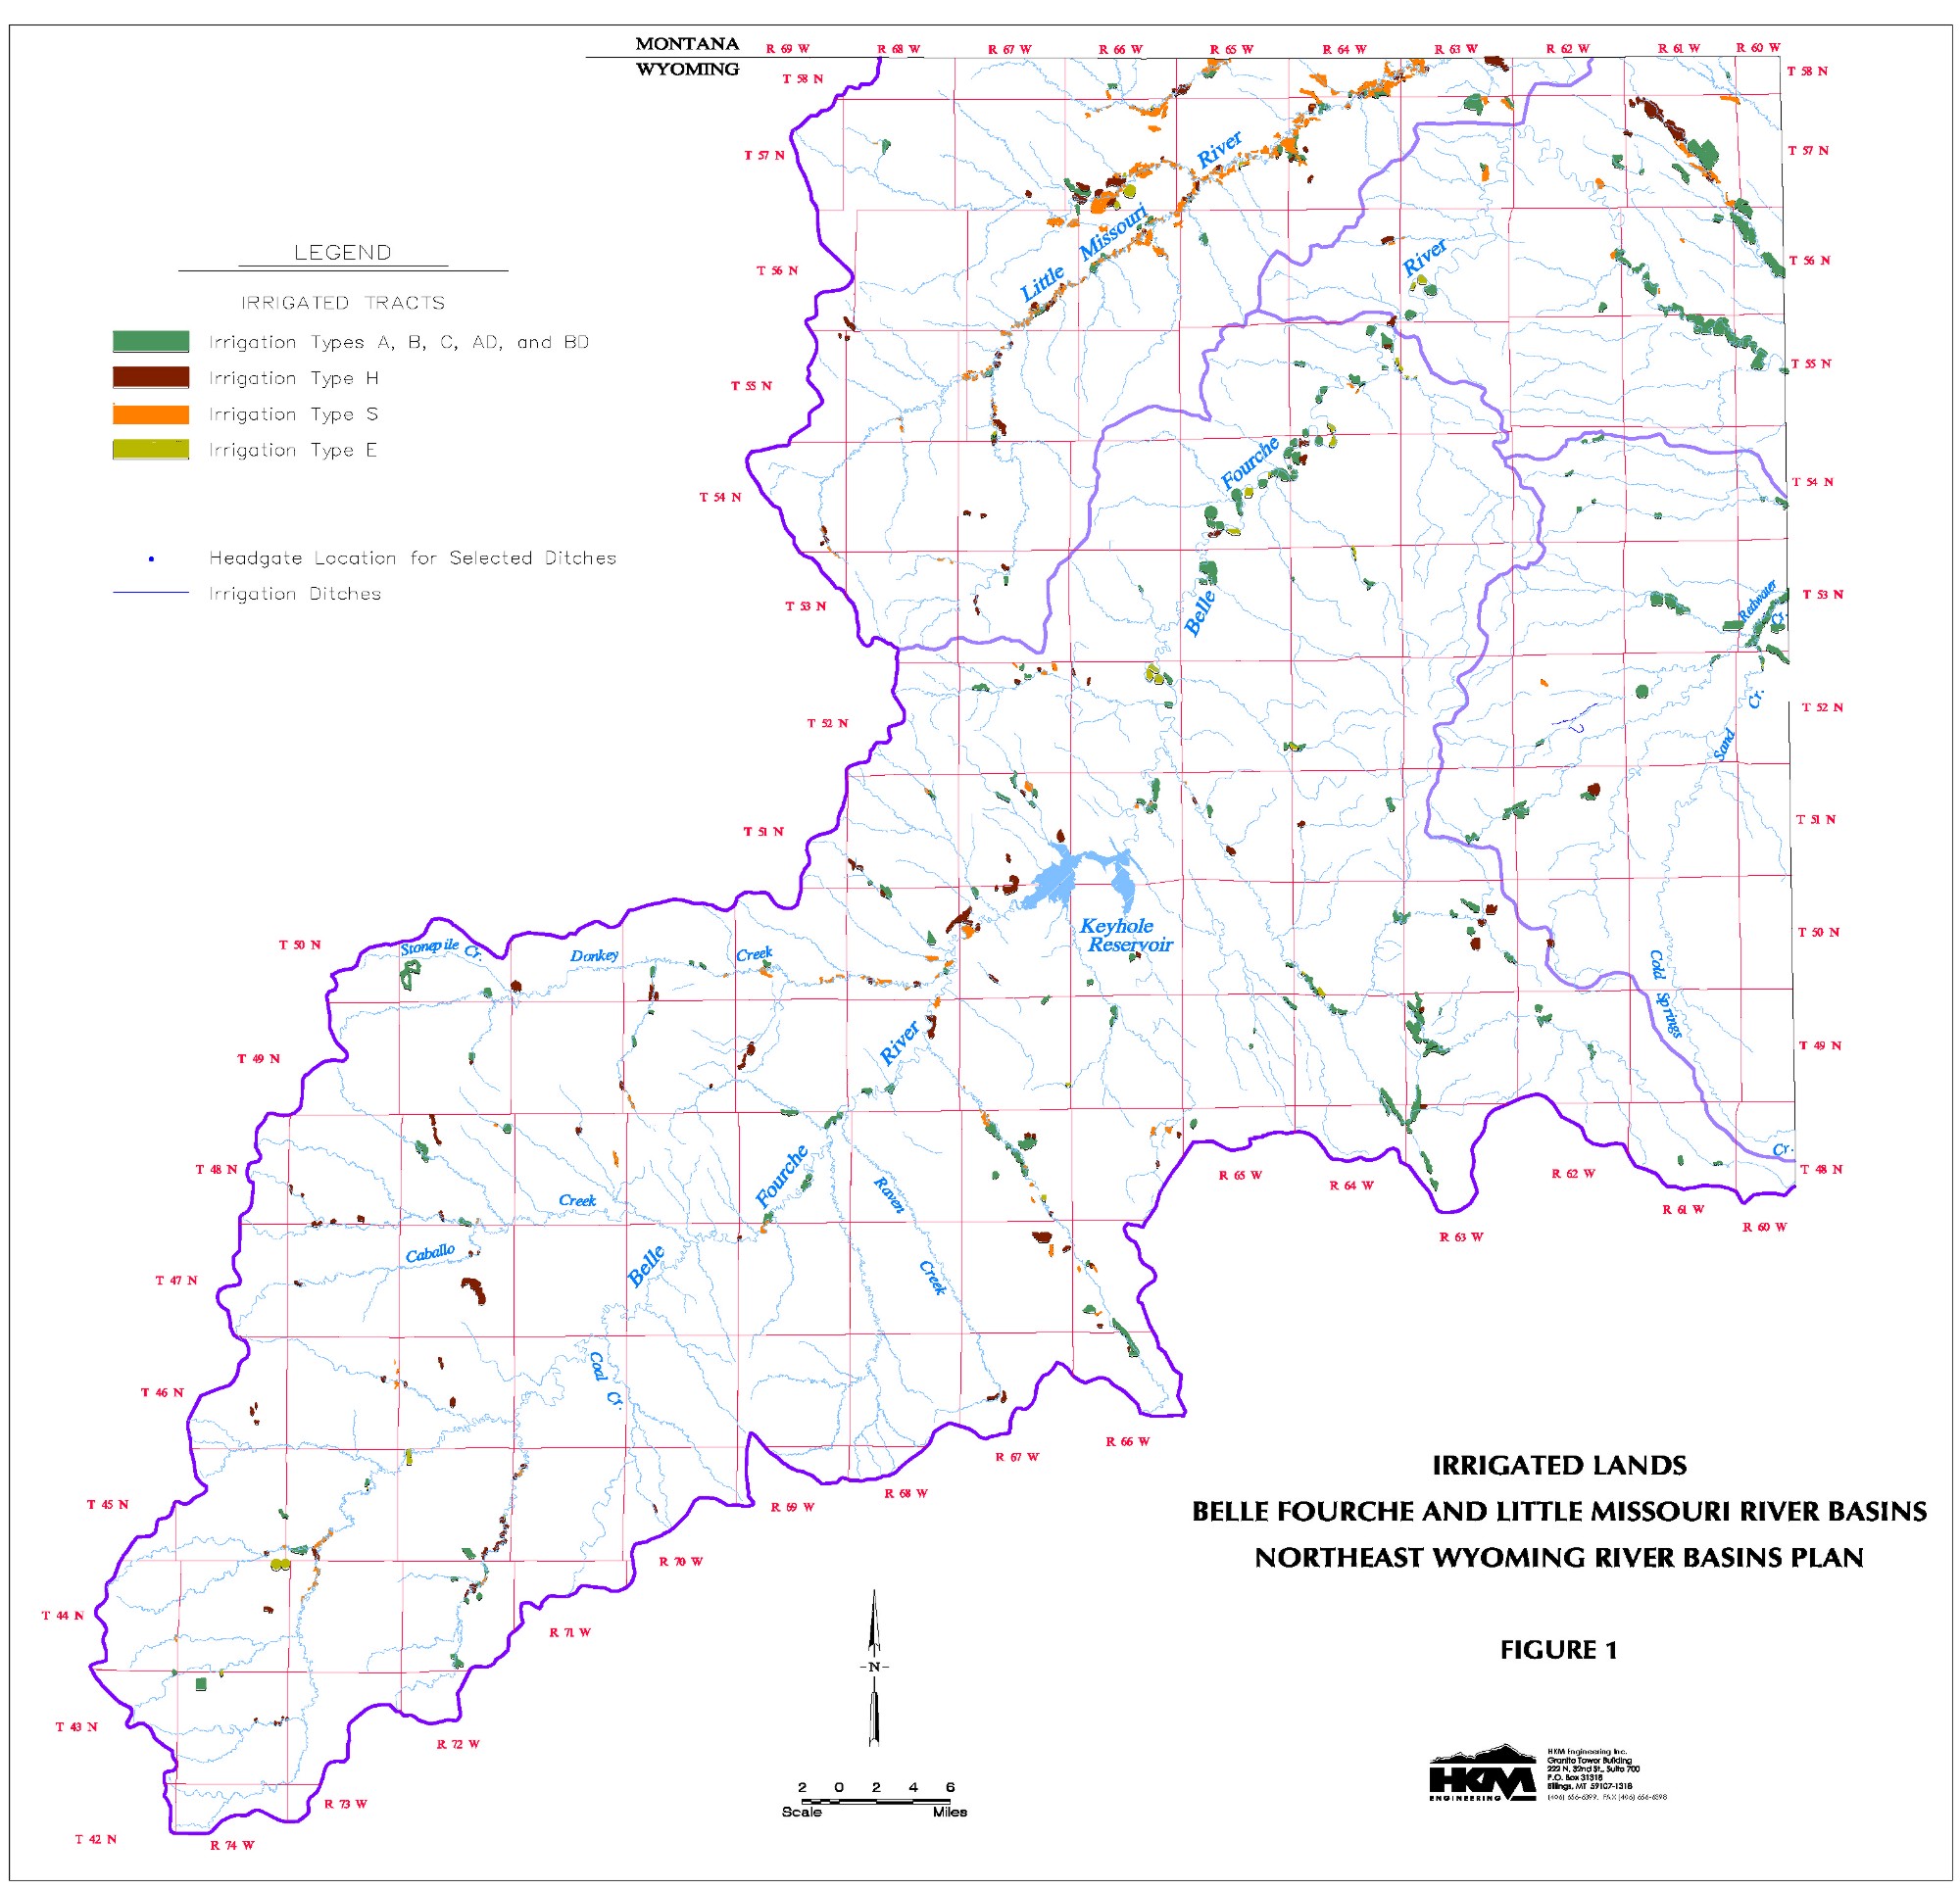 Irrigated Lands, Belle Fourche and Little Missouri River Basins